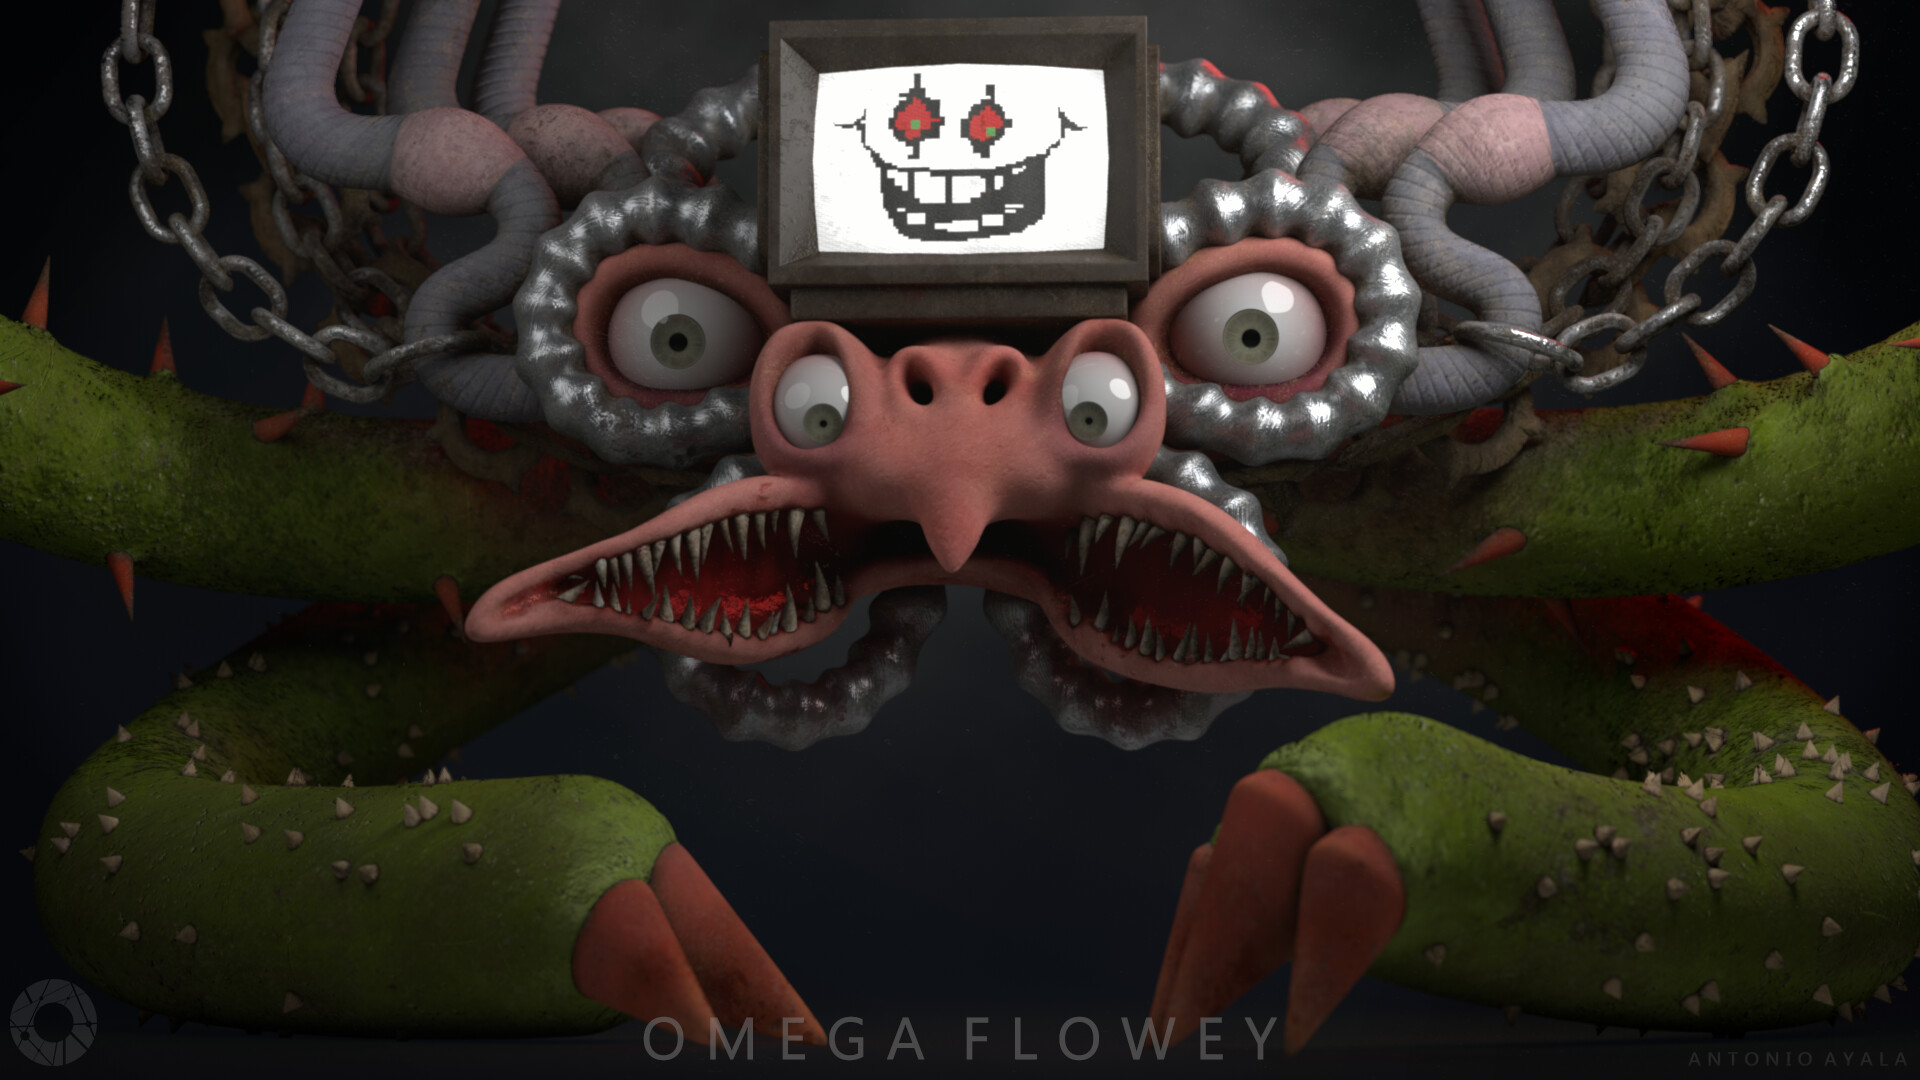 Omega Flowey - Undertale by MrHades, Character Art, 3D